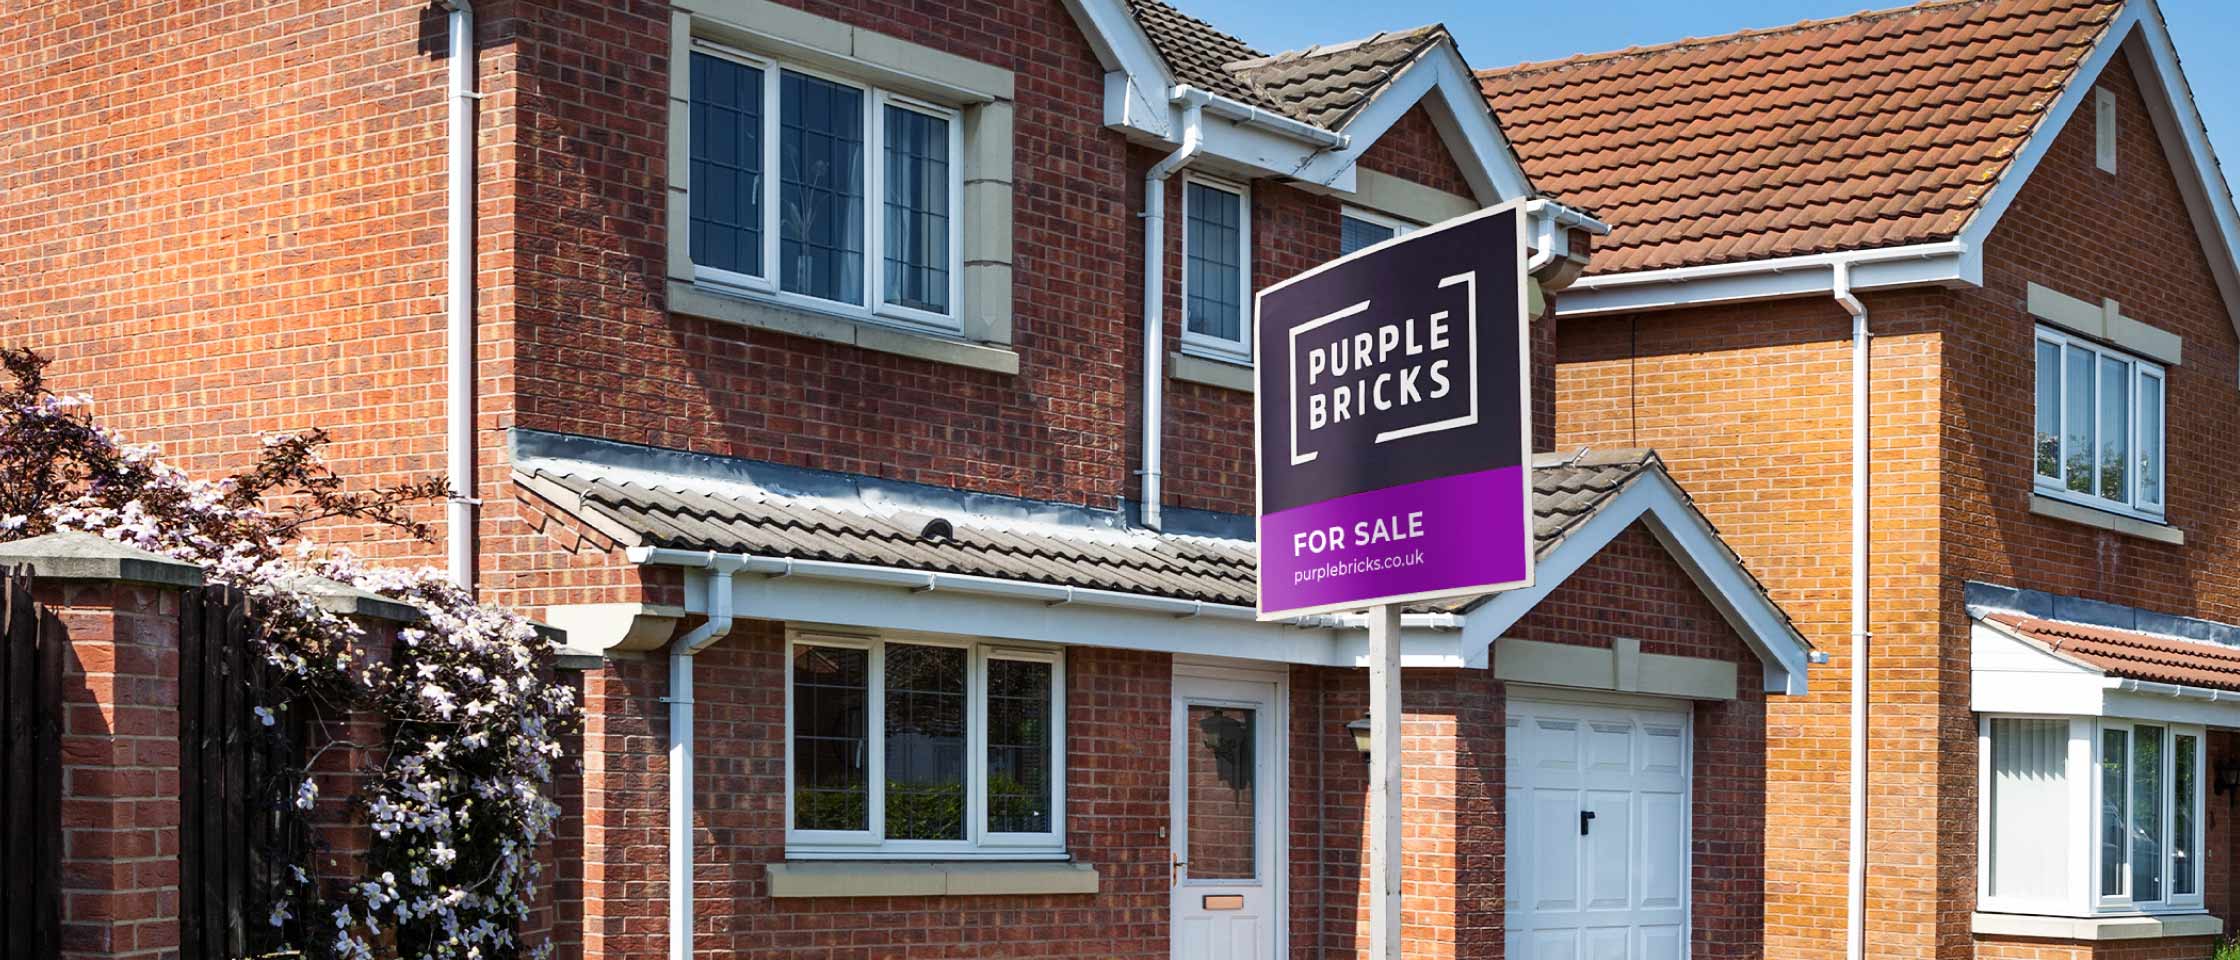 Purplebricks for sale board outside a house